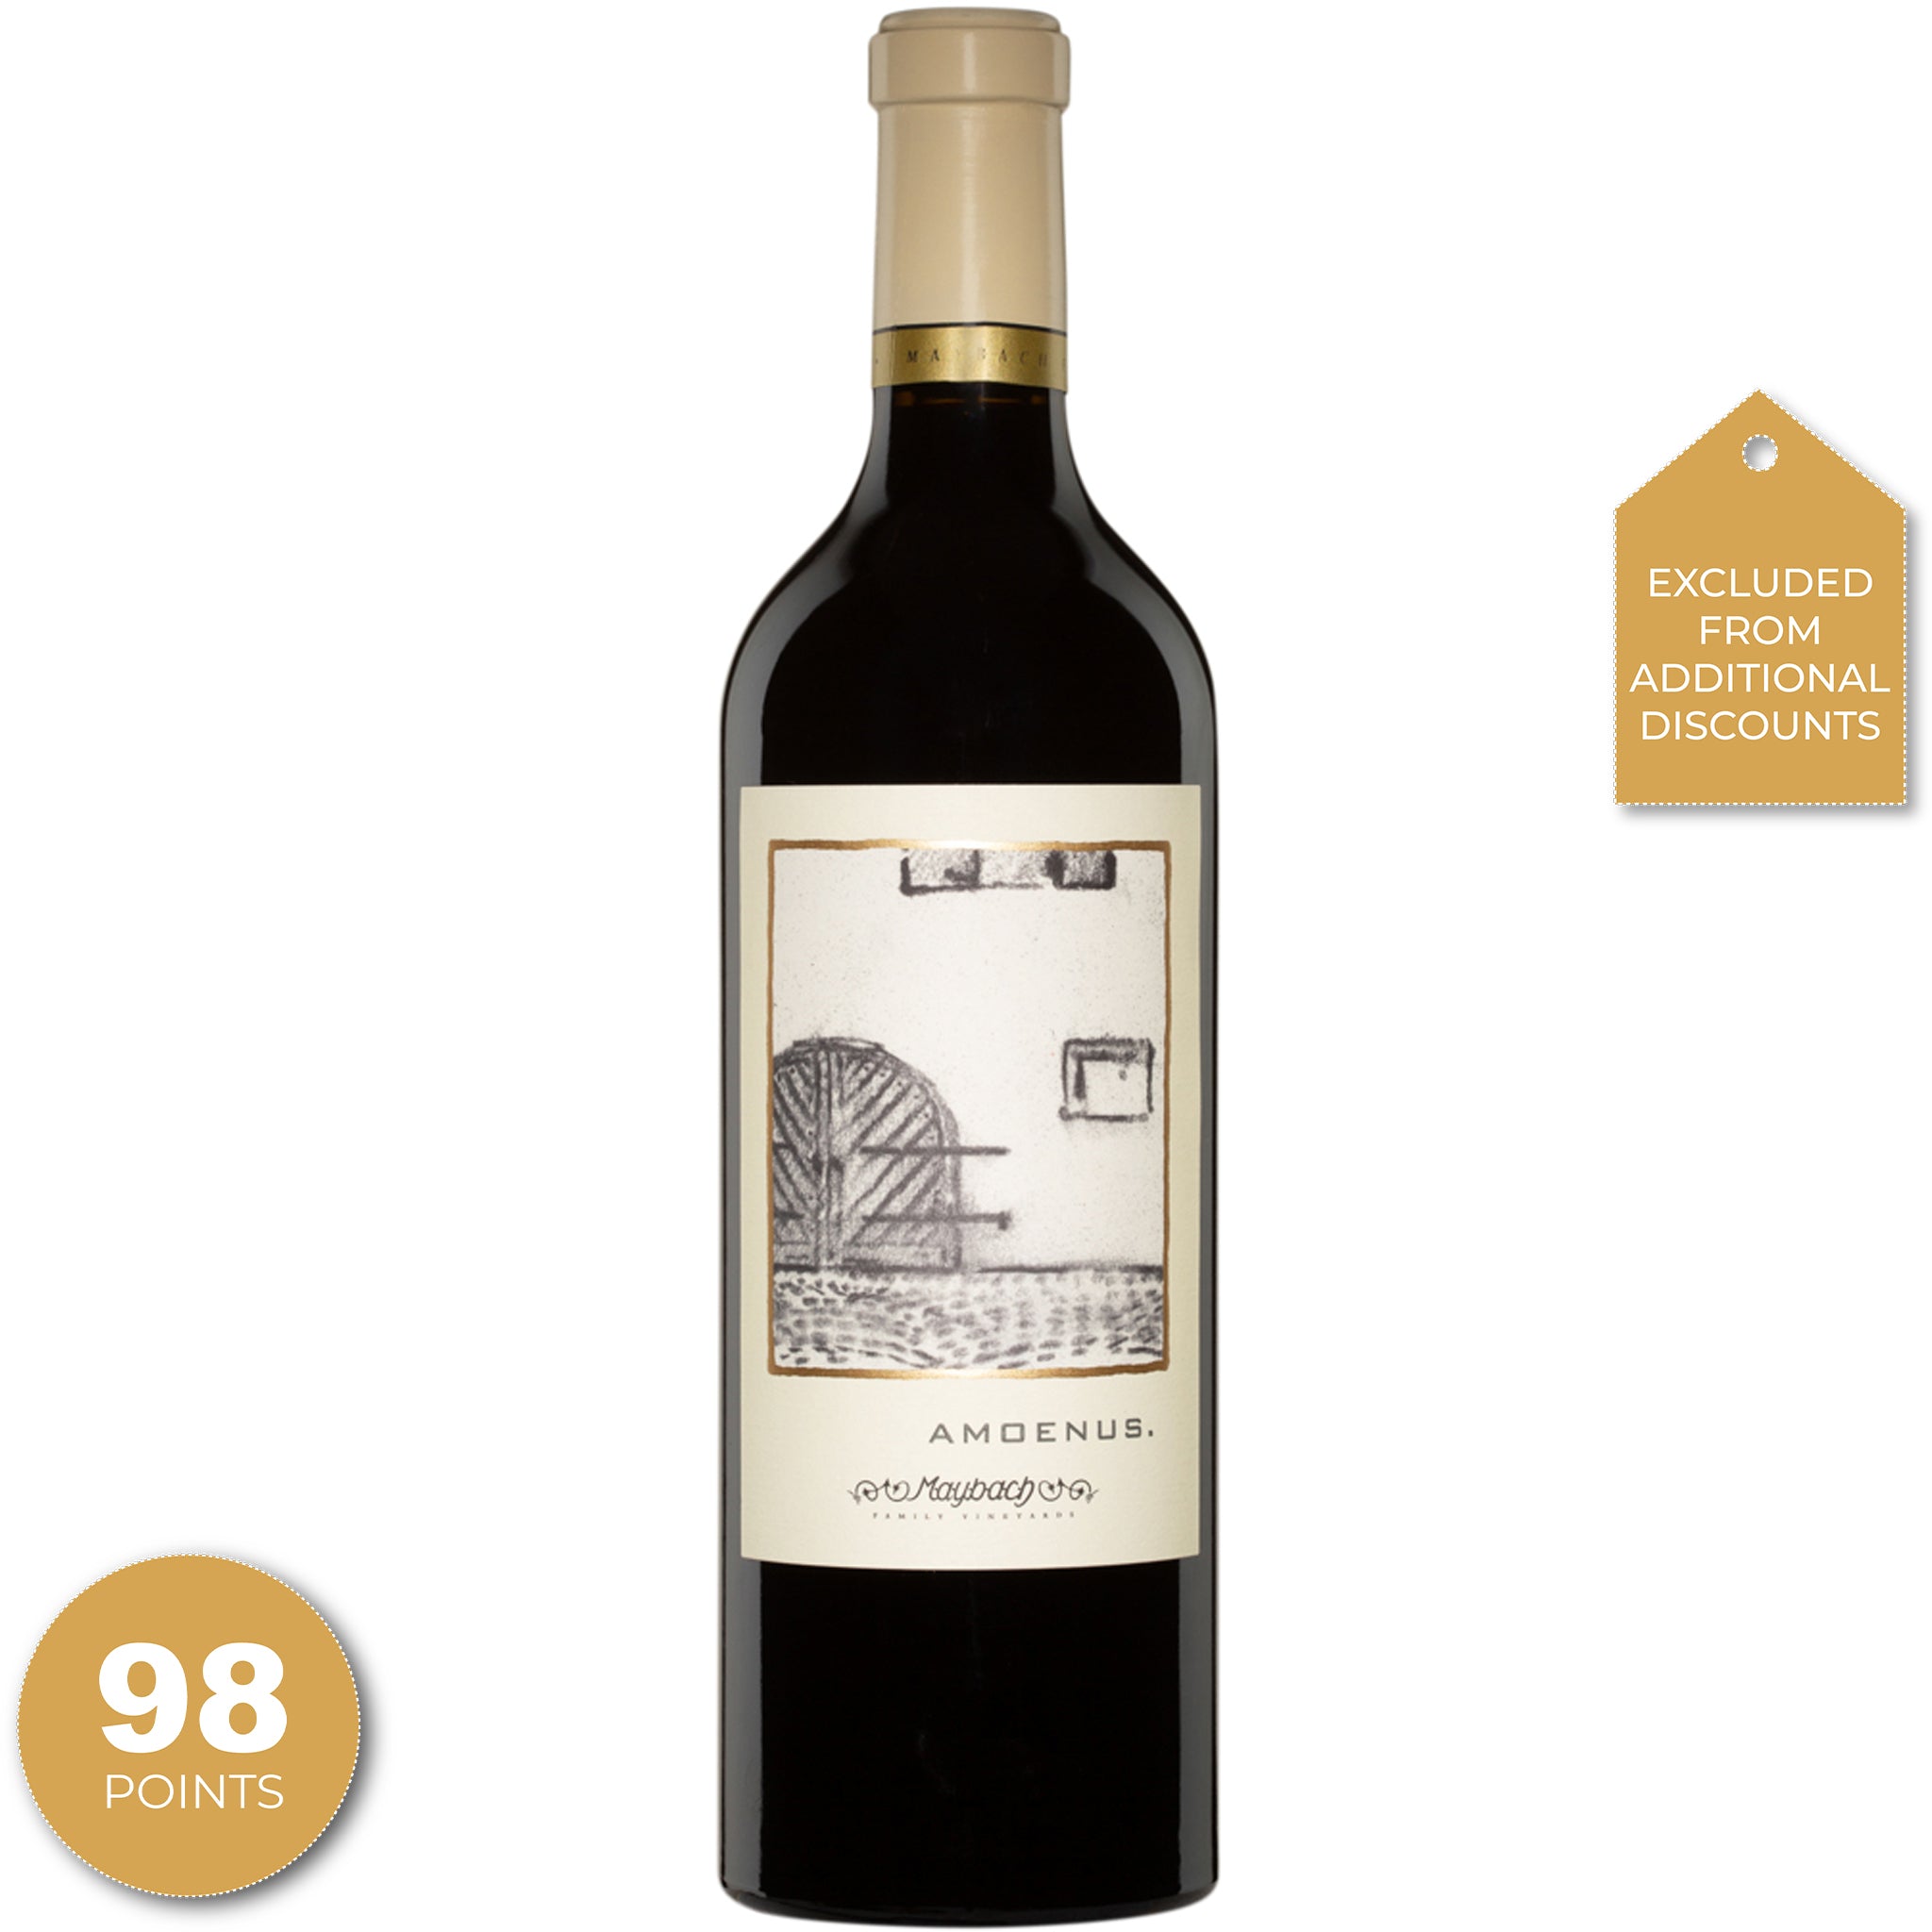 Cervantes Family Vineyards MMXVI Cabernet Sauvignon 2016 750ml